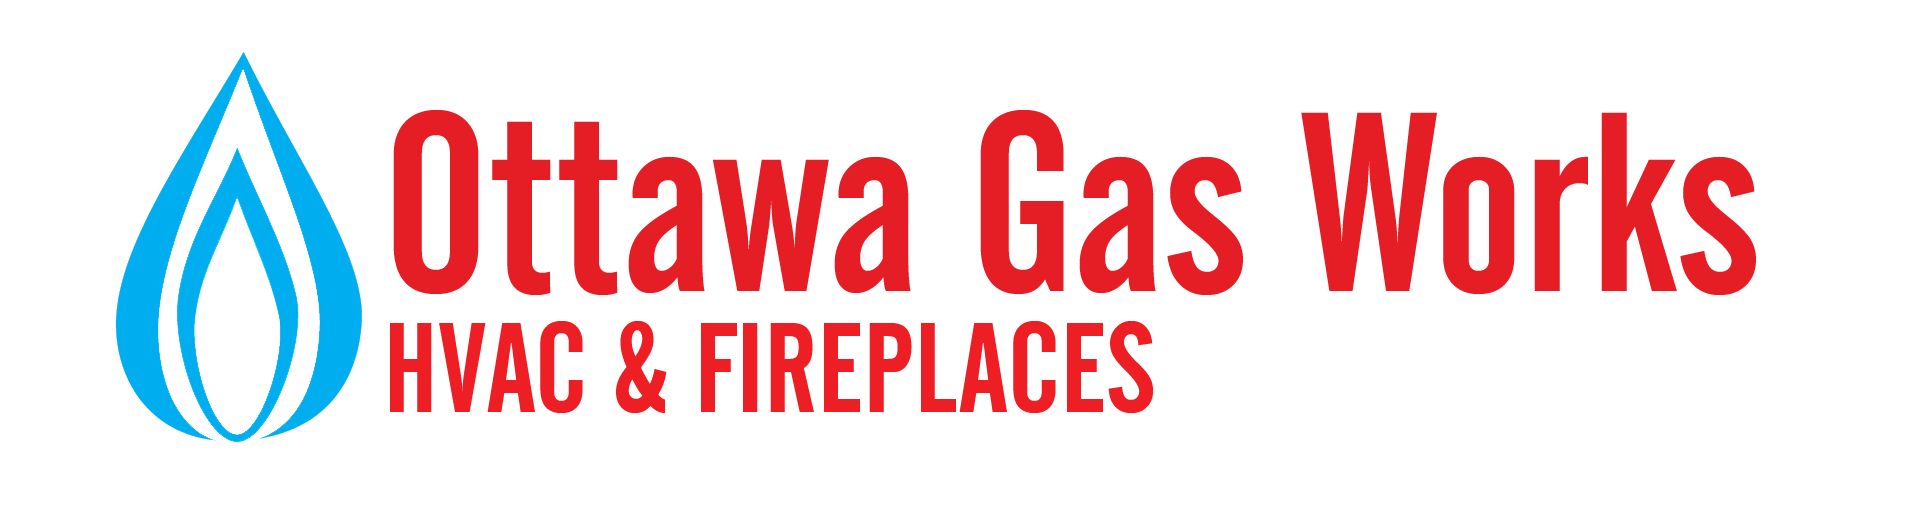 Ottawa Gas Works